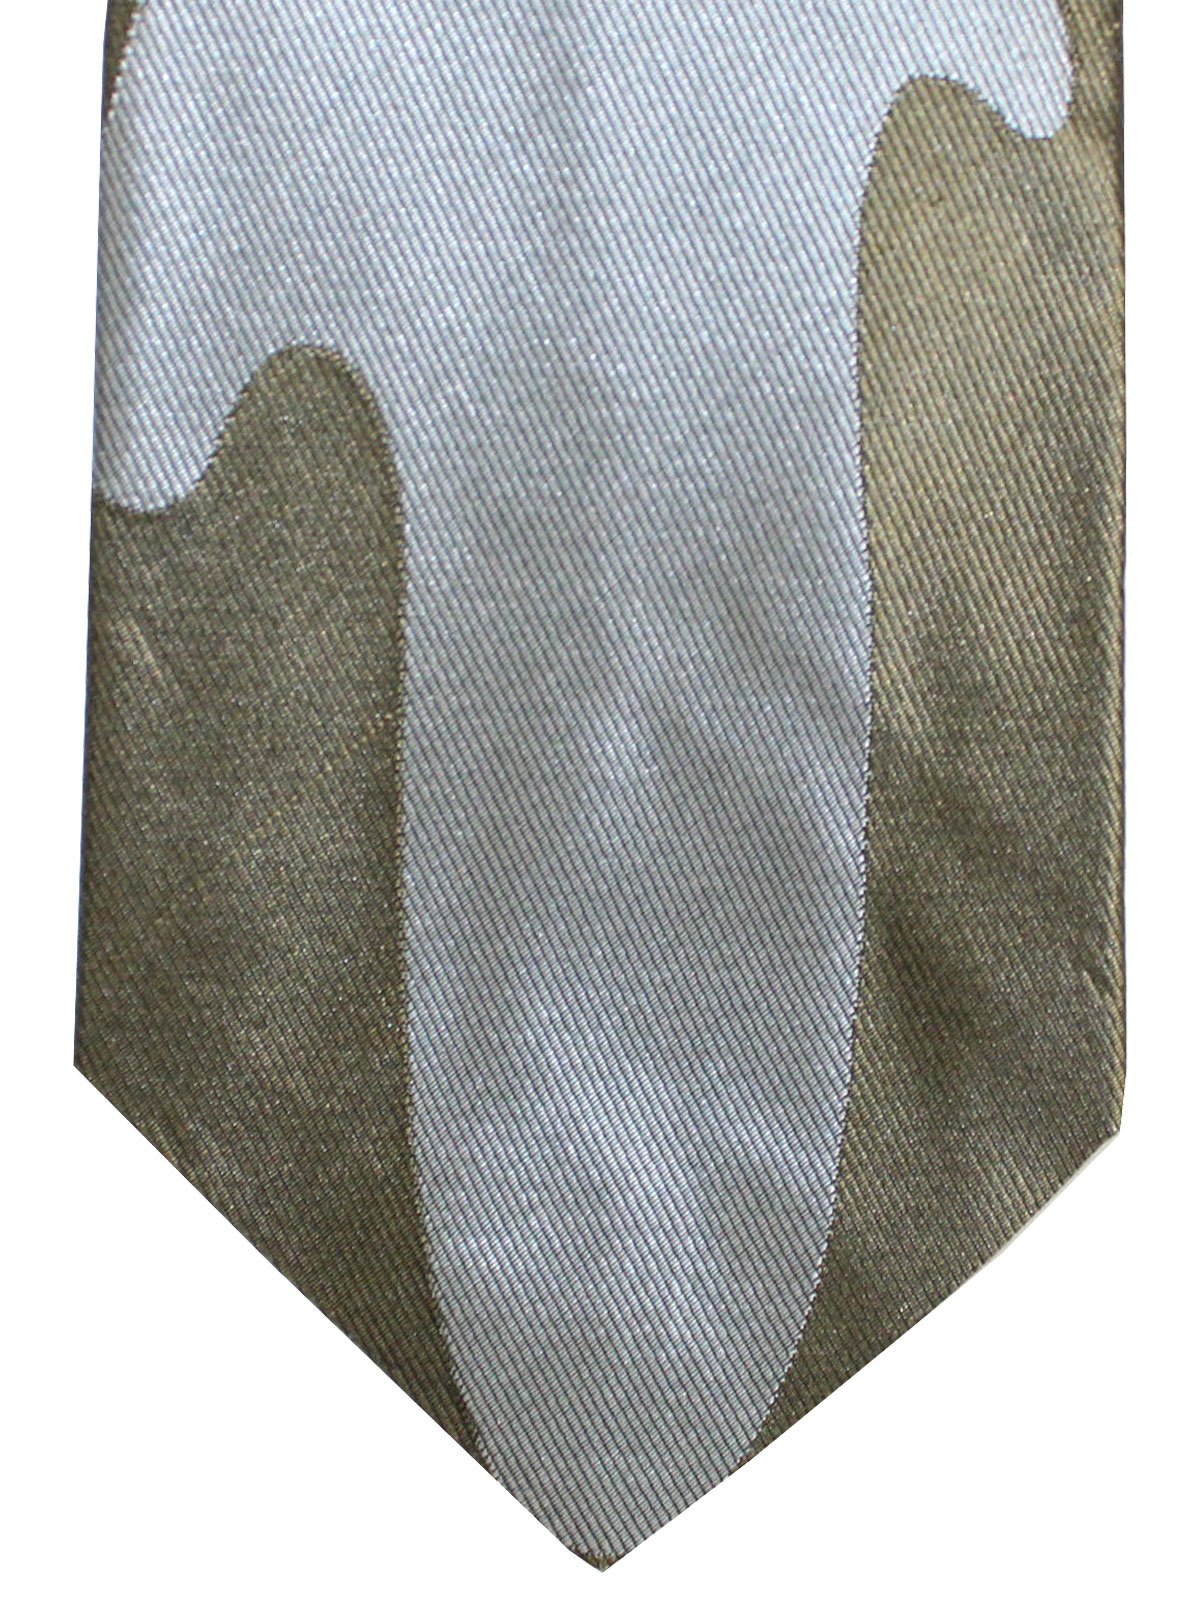 Gene Meyer Necktie Taupe Gray Design - Hand Made In Italy